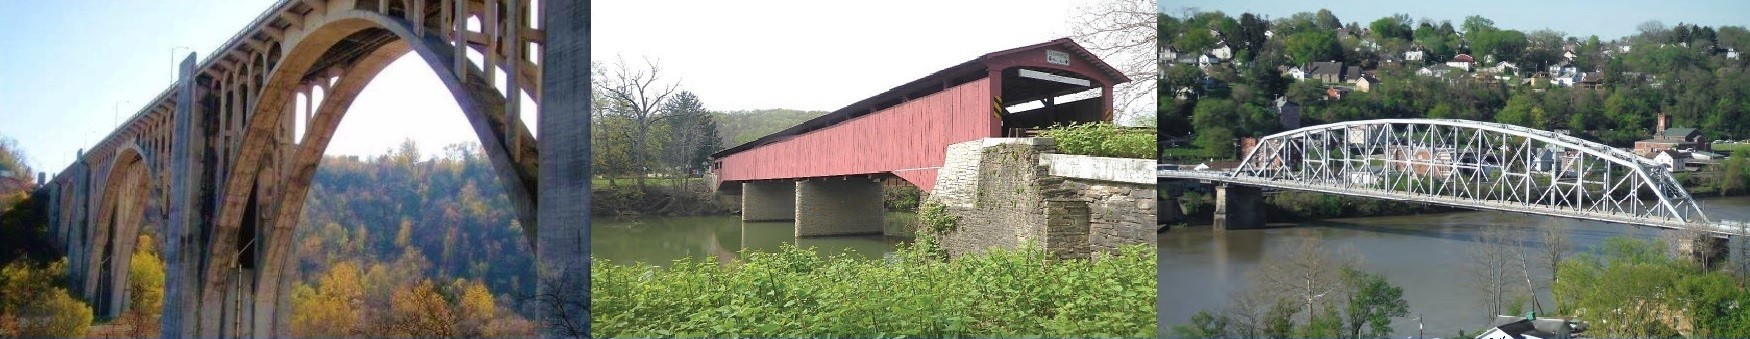 Historic Bridges of PA.jpg